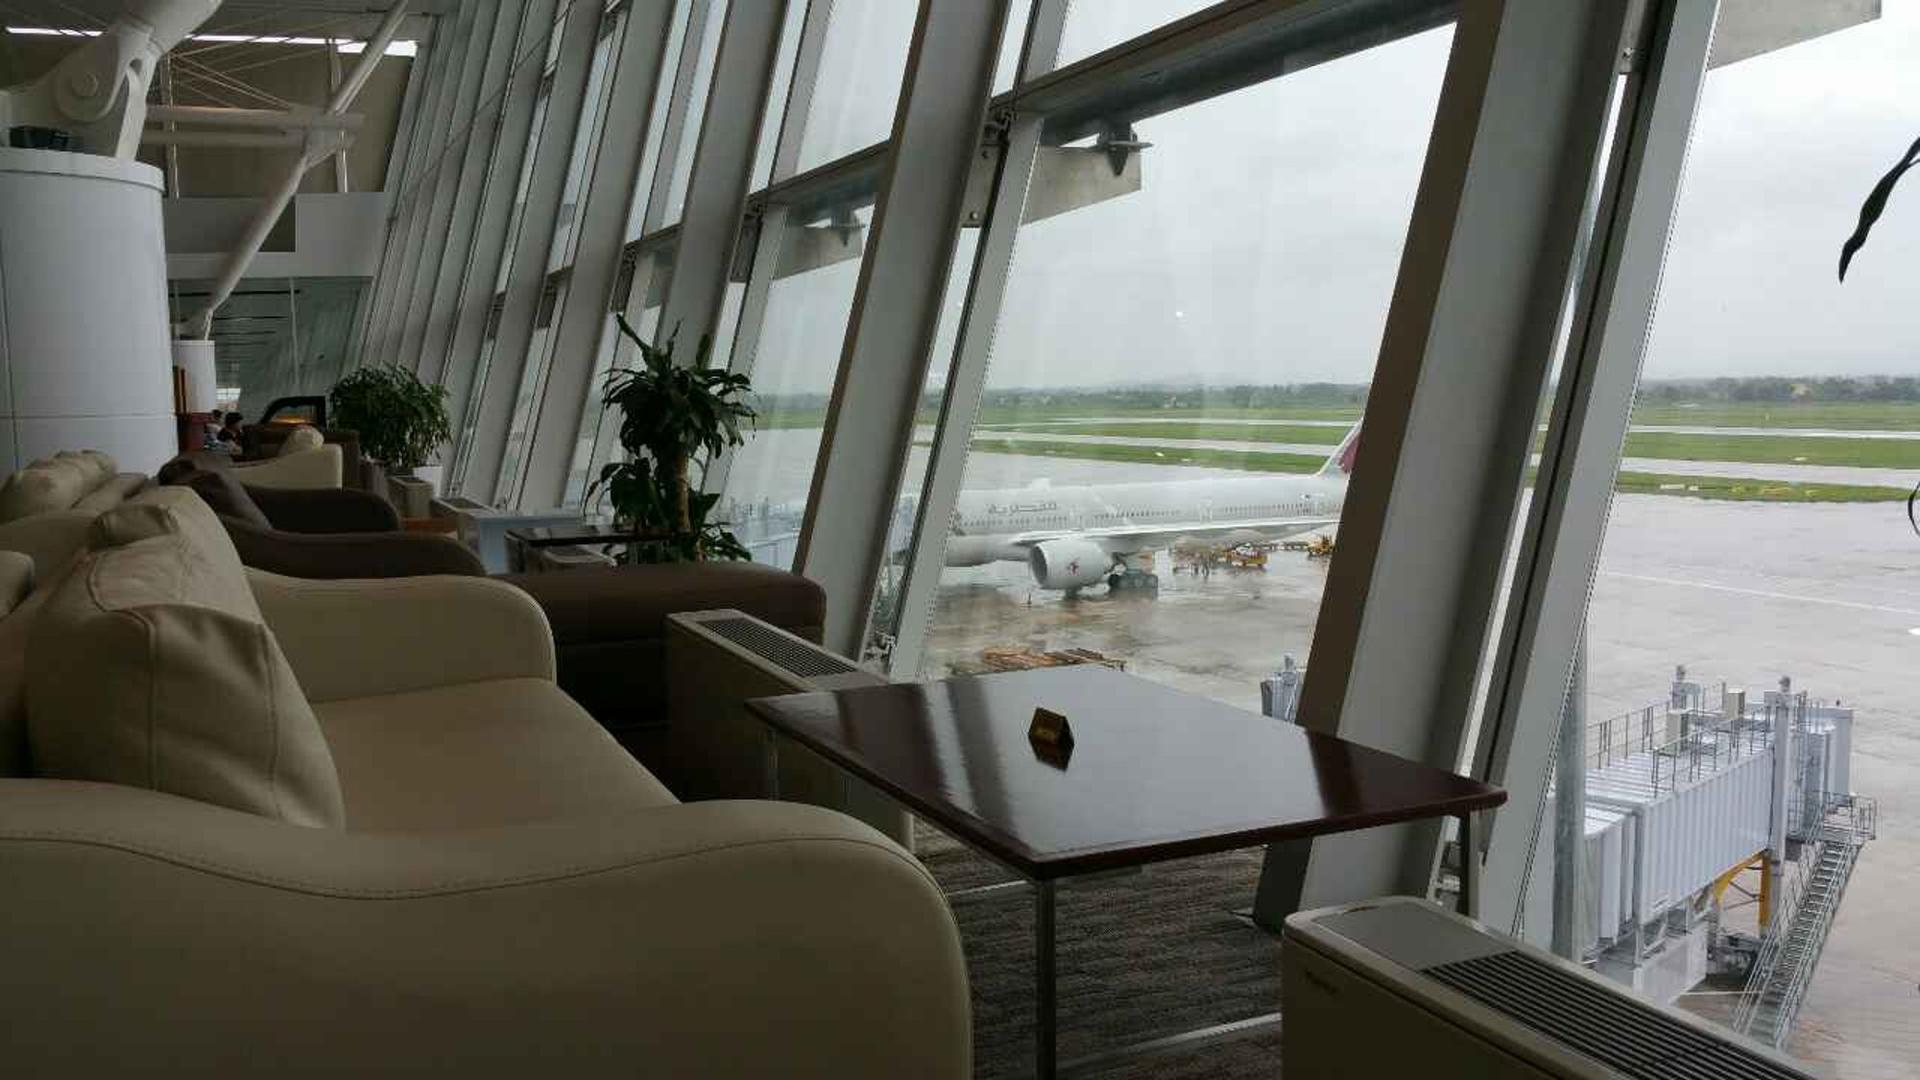 Noi Bai International Airport Business Lounge image 11 of 26